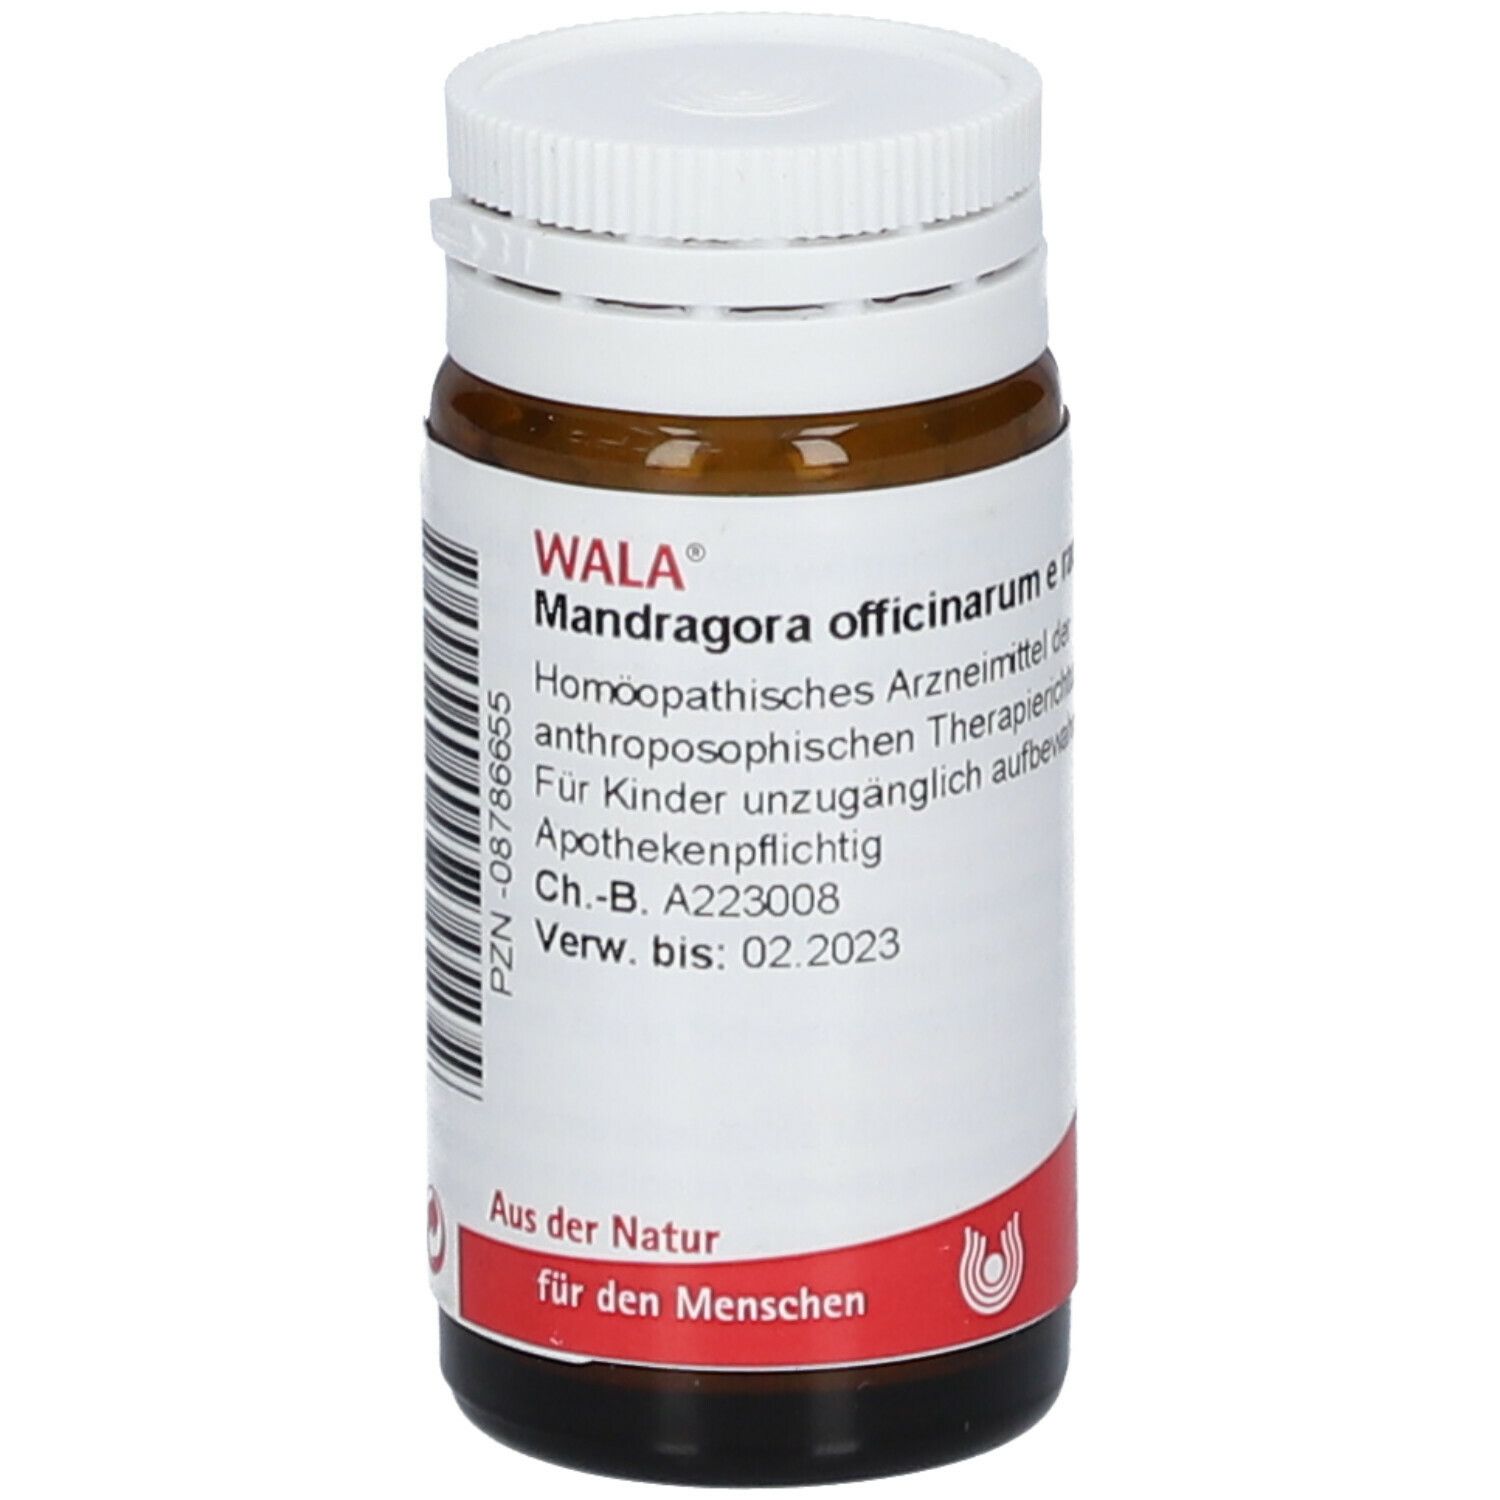 Wala® Mandragora officinarum e radice D 4